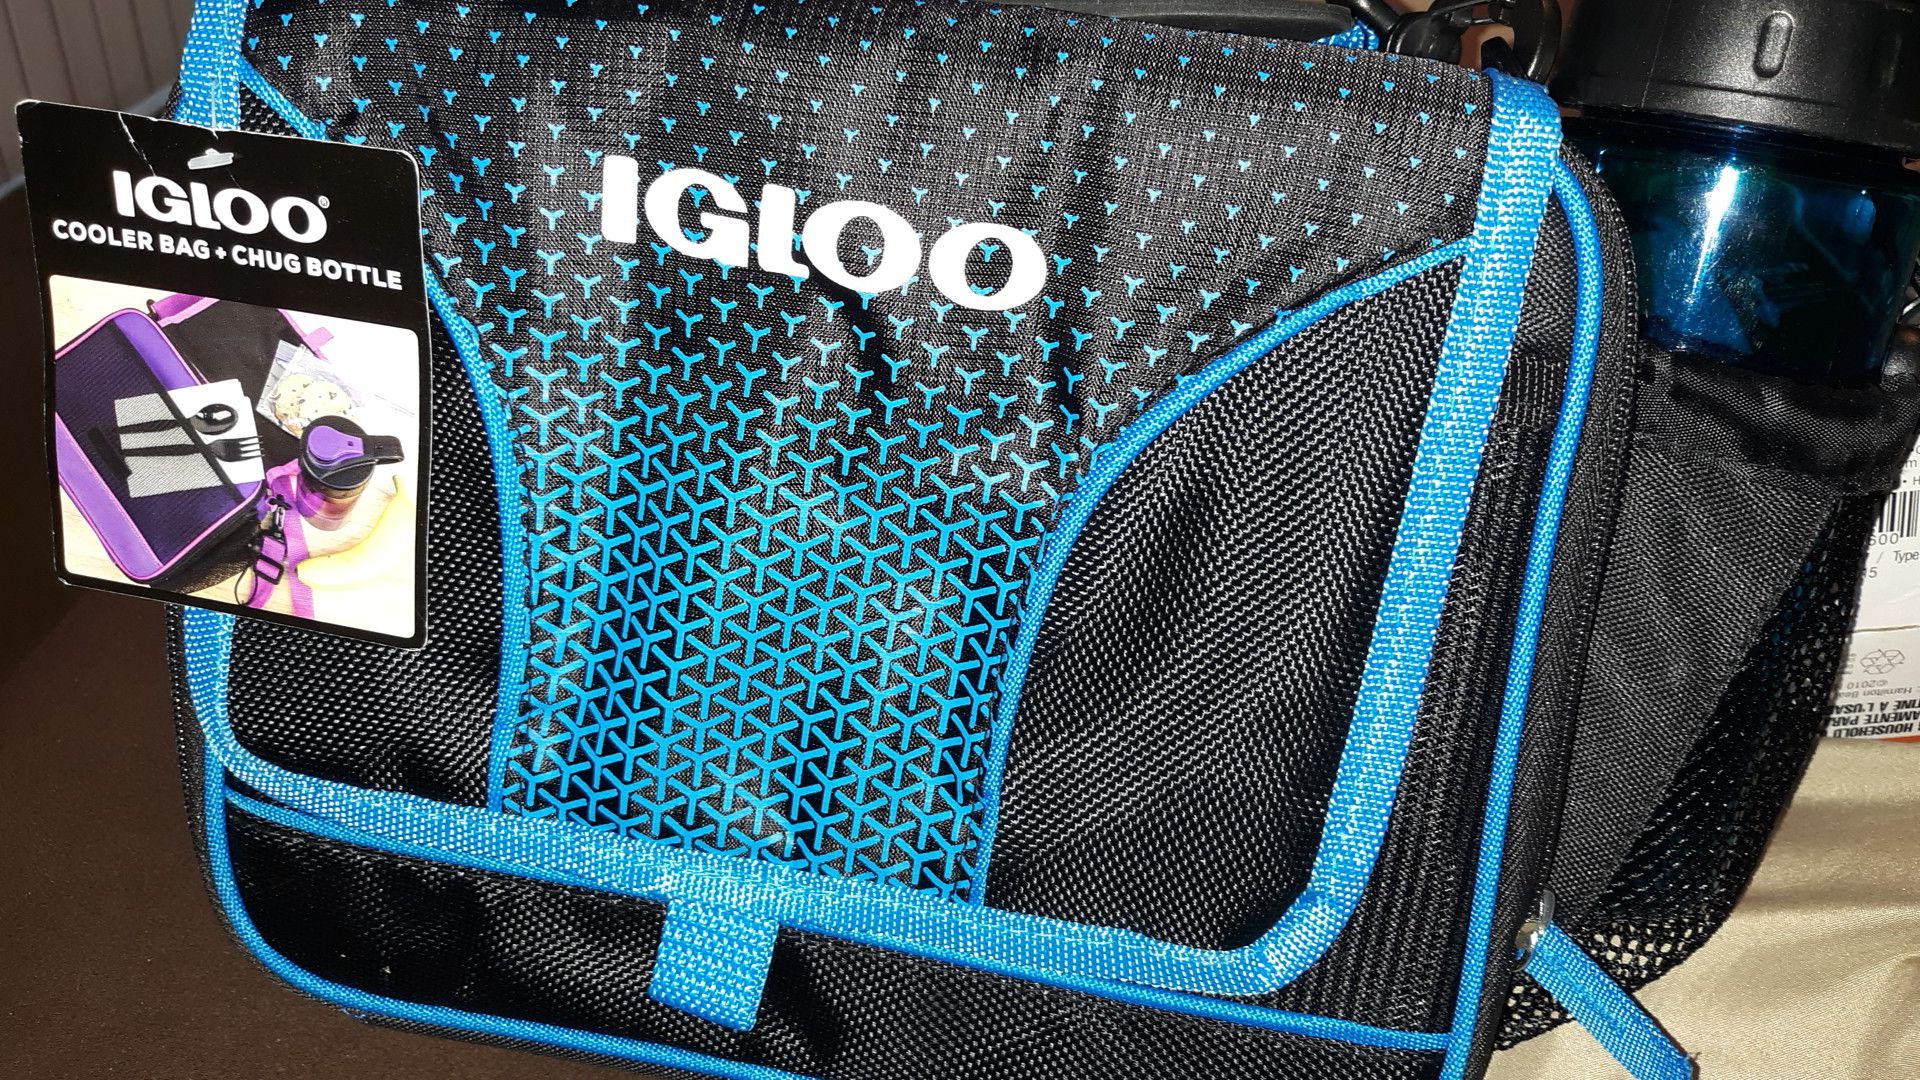 Igloo cooler bag+chug bottle brand new